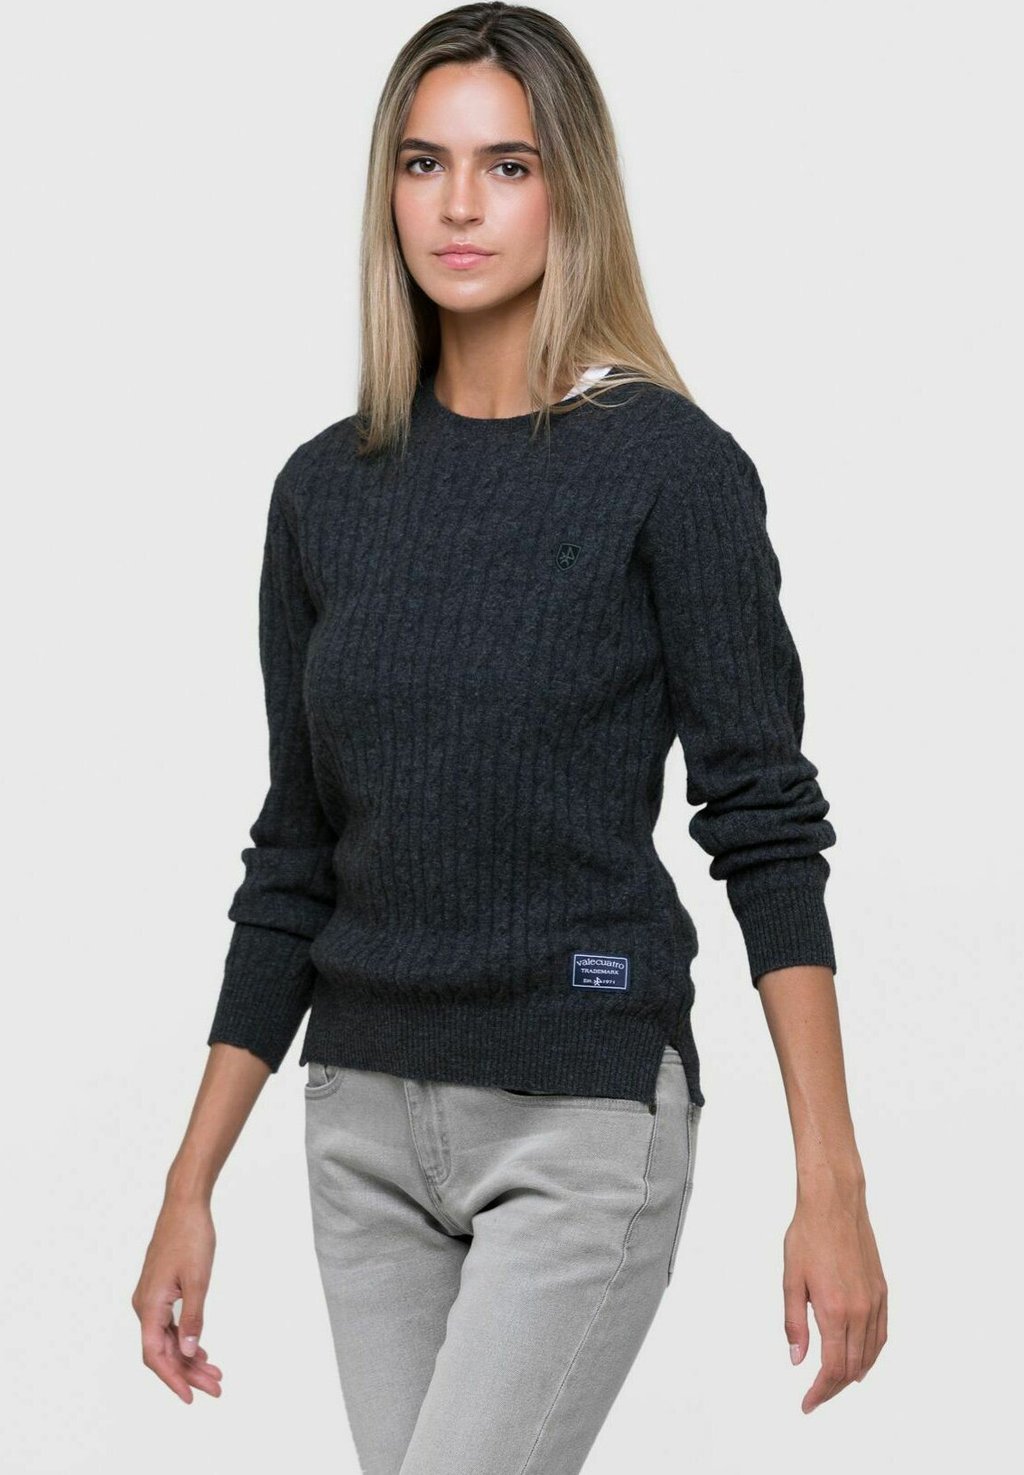 Вязаный свитер VALECUATRO, темно-серый